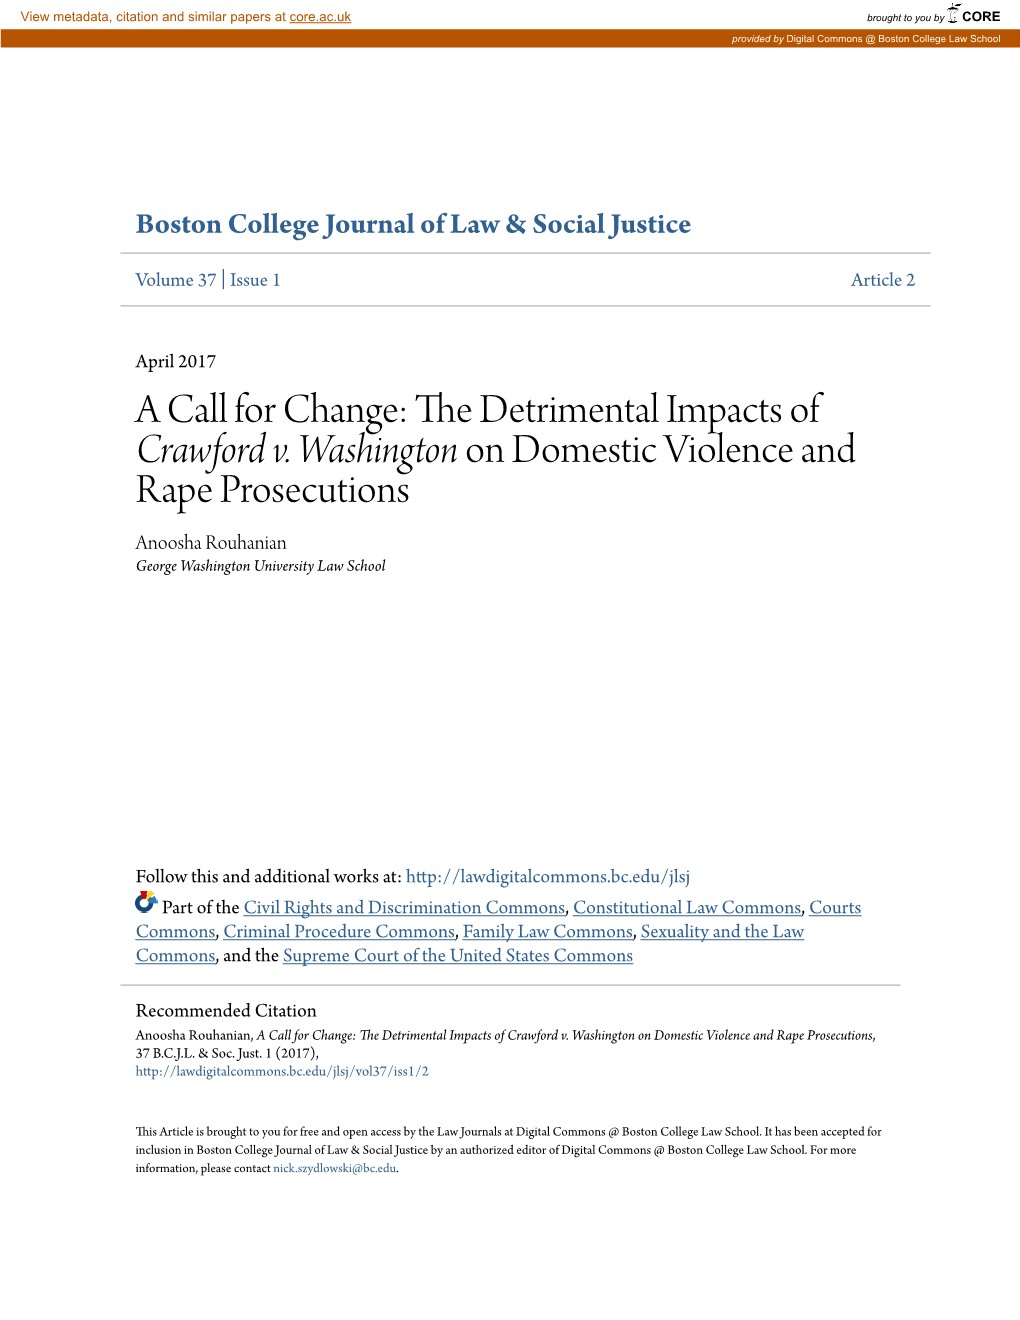 The Detrimental Impacts of Crawford V. Washington on Domestic Violence and Rape Prosecutions, 37 B.C.J.L